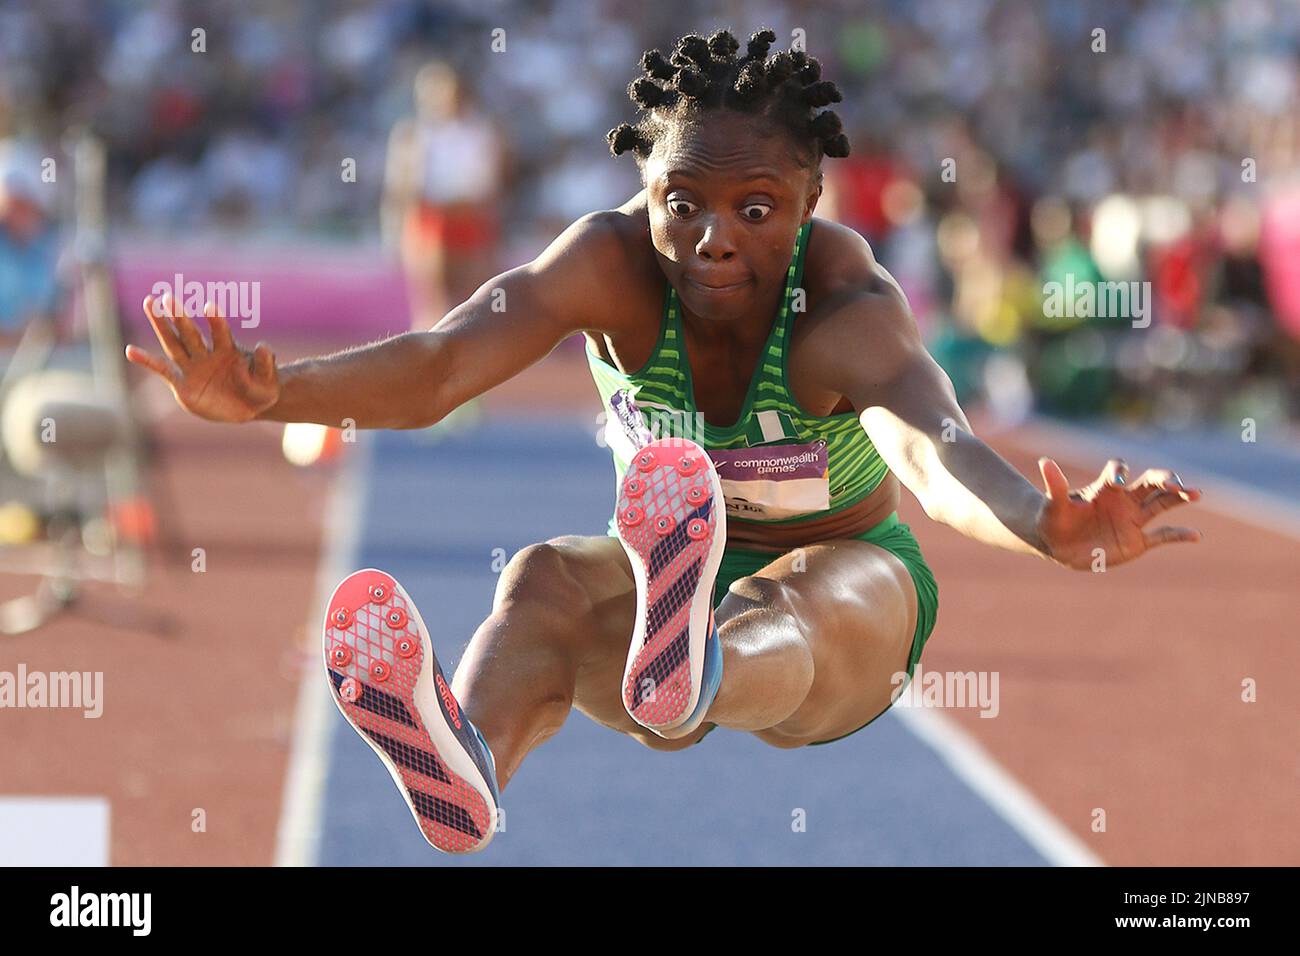 Ruth USORO aus Nigeria beim Women's Long Jump - Finale bei den Commonwealth Games in Birmingham 2022 Stockfoto